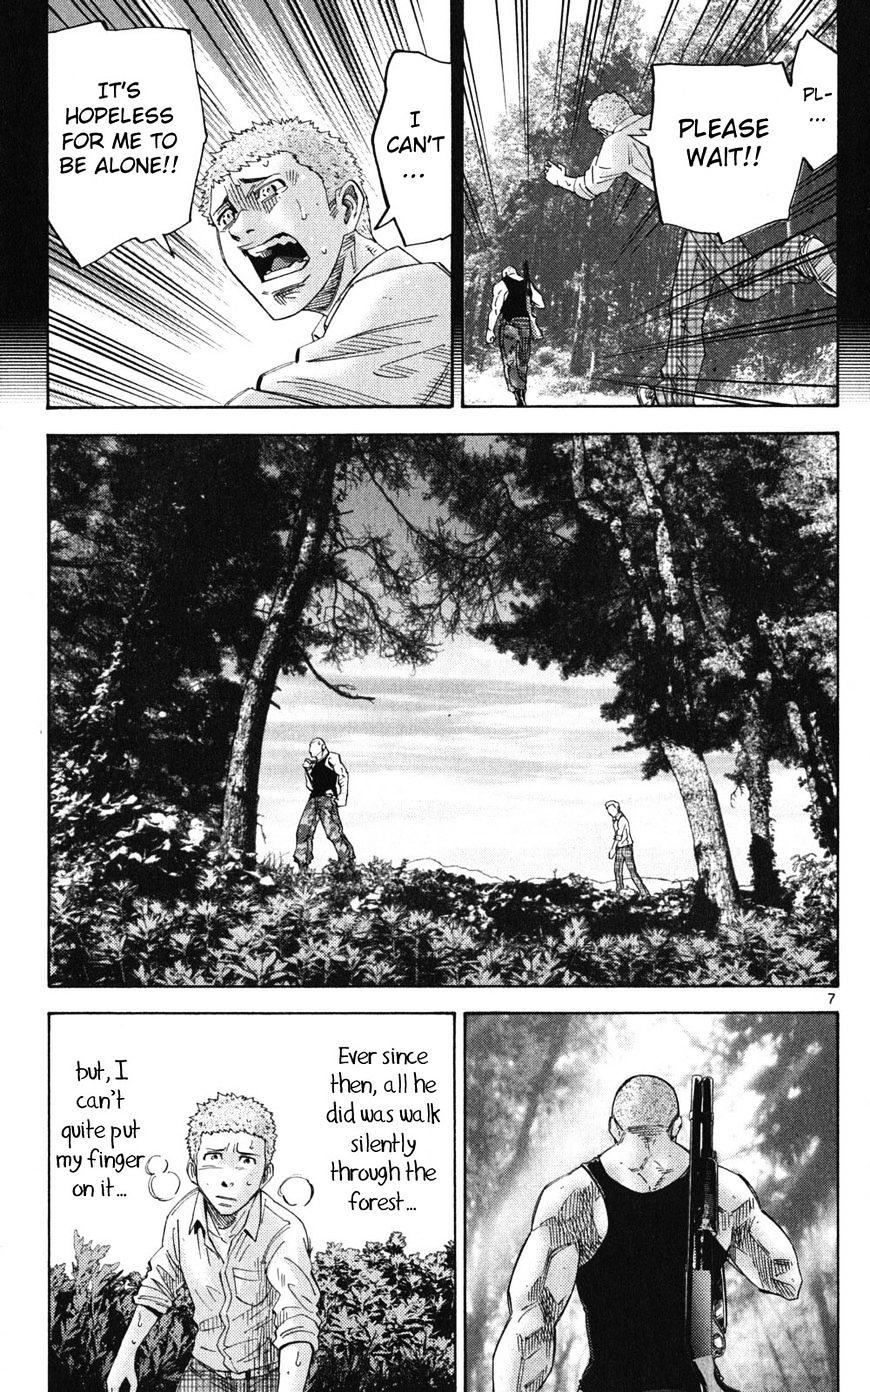 Imawa No Kuni No Alice Chapter 49.2 : Side Story 5 - King Of Spades (2) page 7 - Mangakakalot